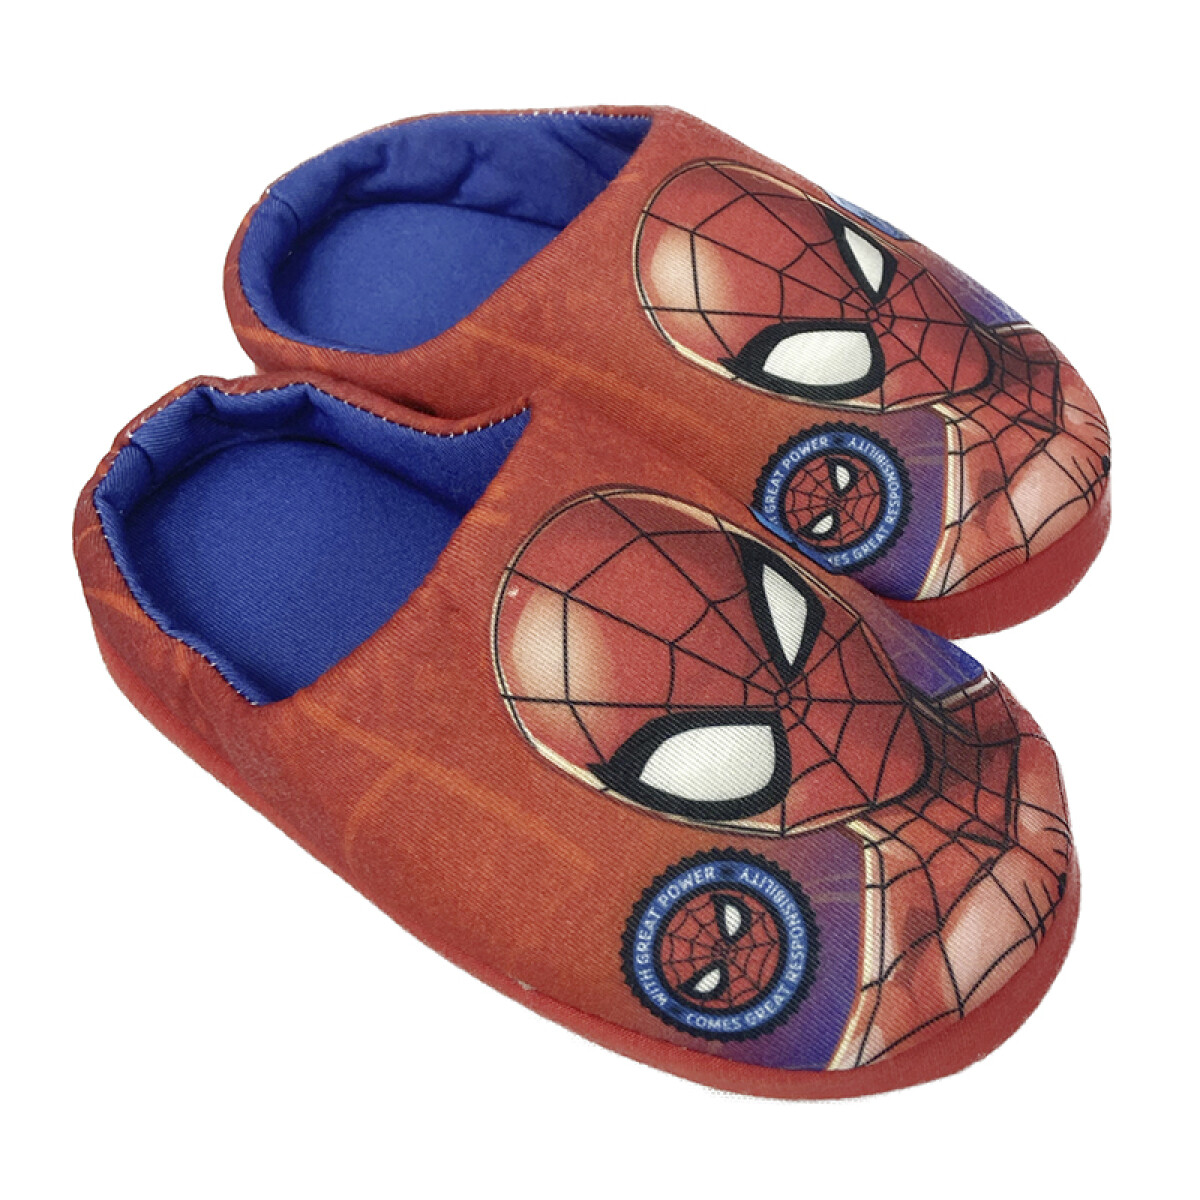 Pantufla Infantil Spiderman Oficial Talle 23/28 